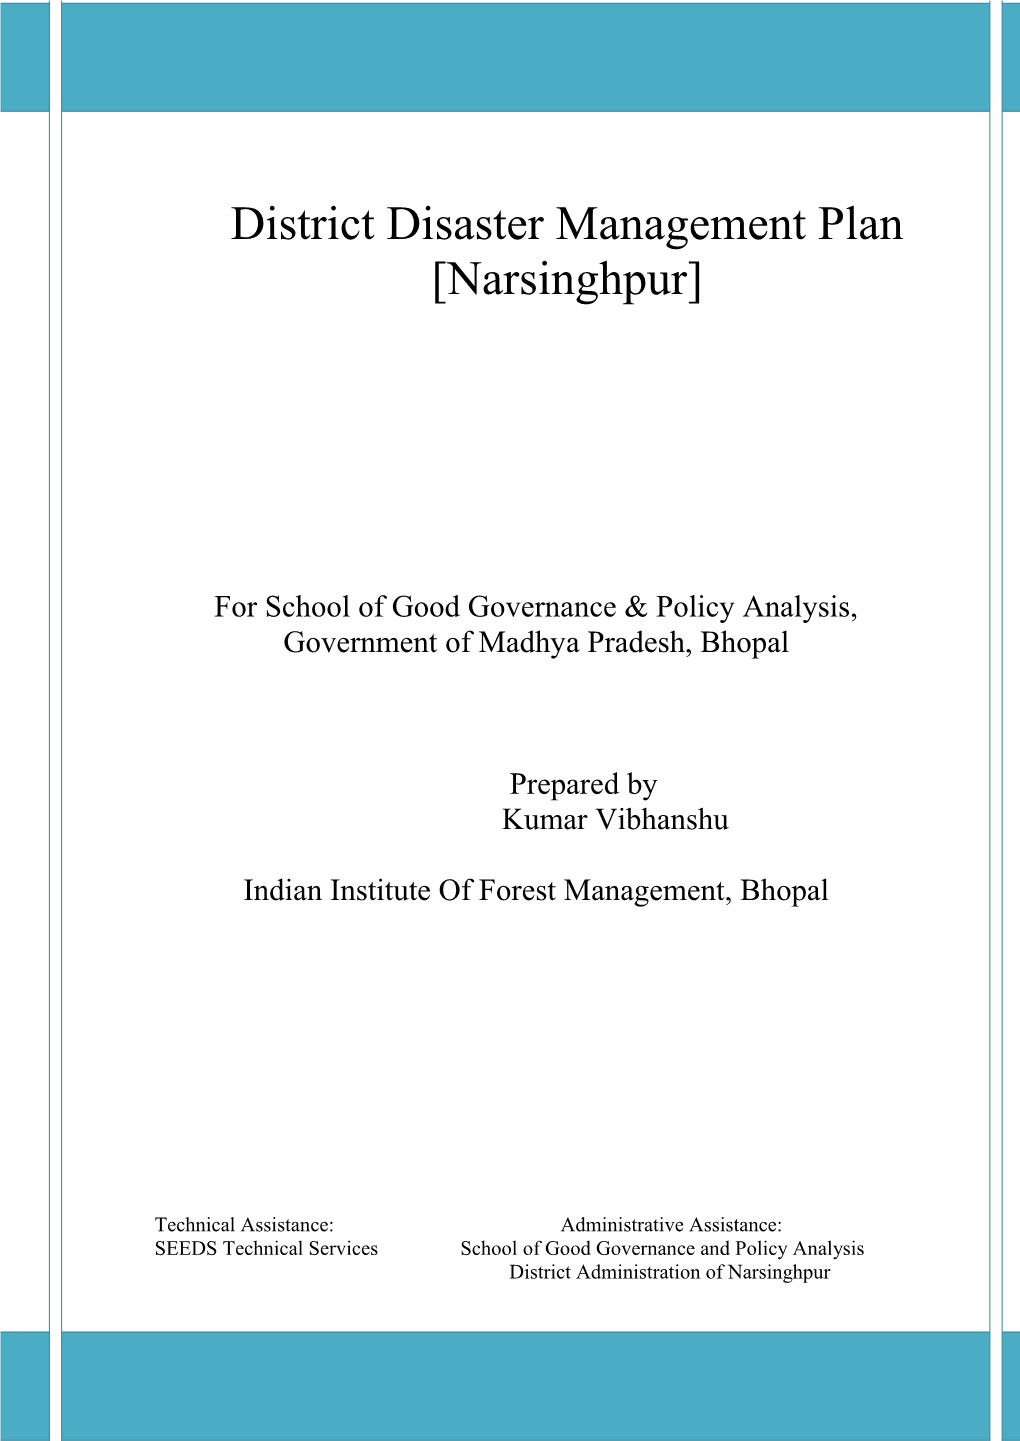 District Disaster Management Plan [Narsinghpur]